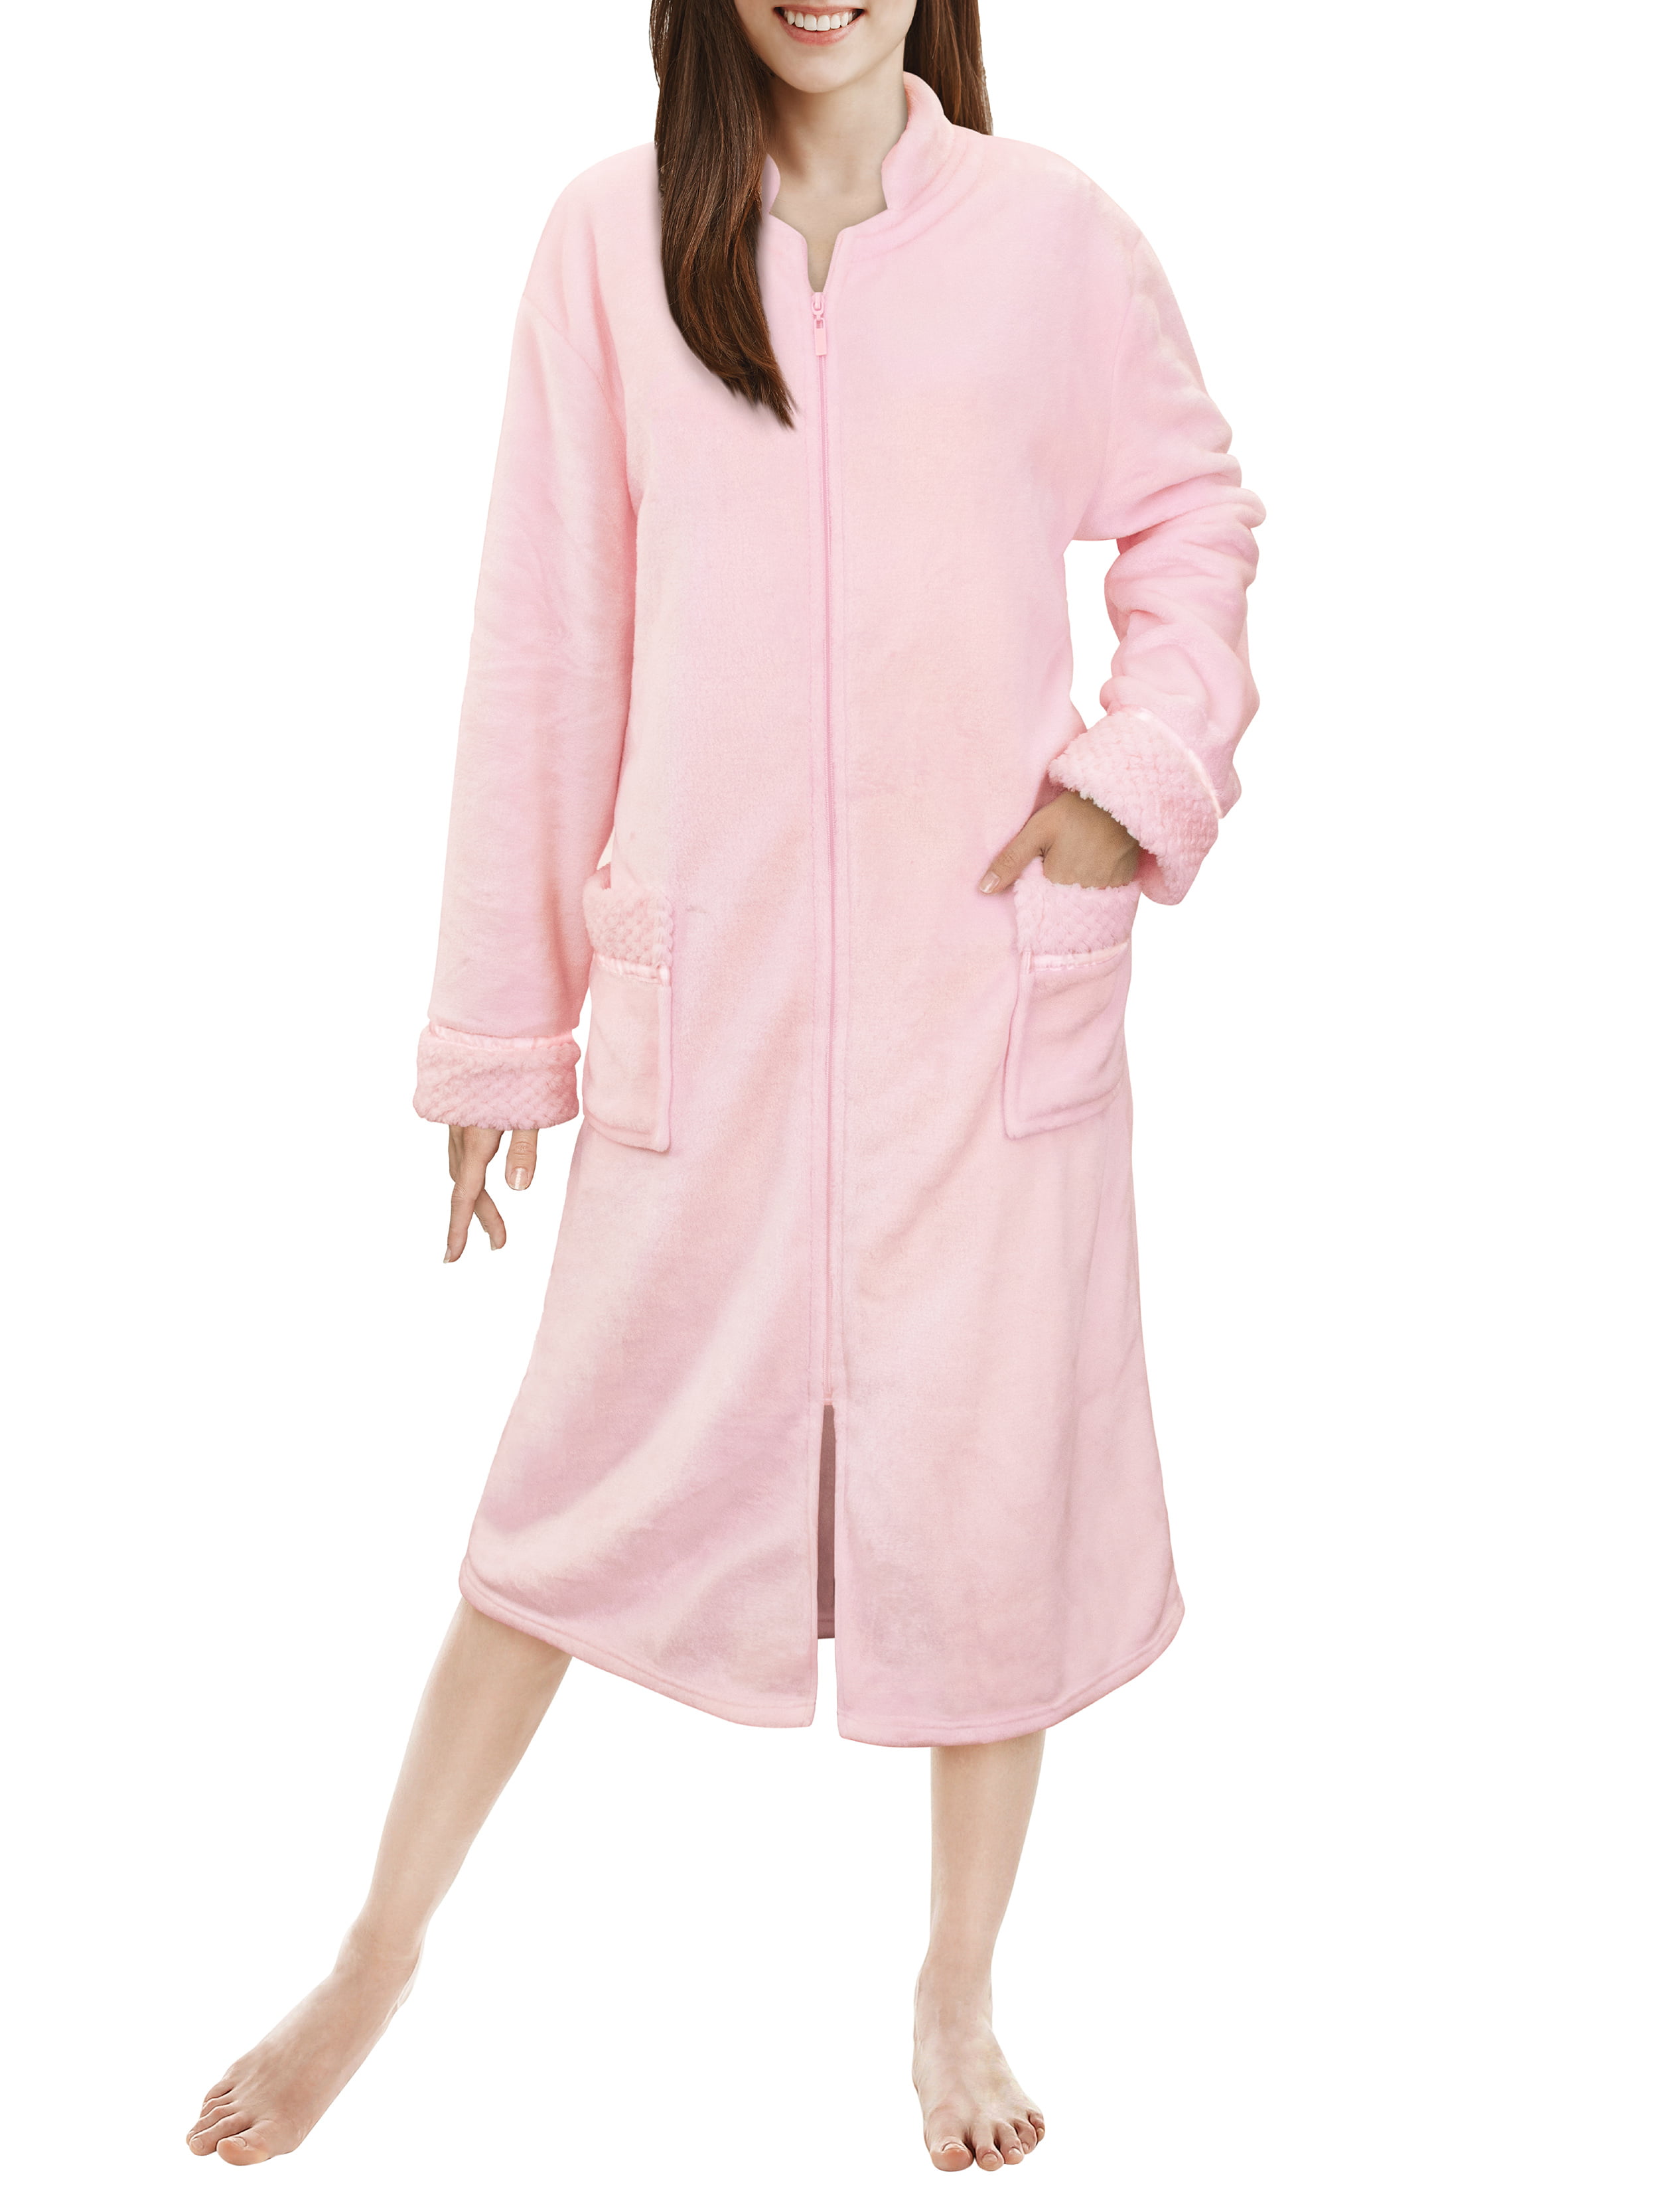 Sock Stack Kids Novelty Hooded Towelling Robe Super Soft 100% Cotton Boys Girls Bathrobe Bath Robes